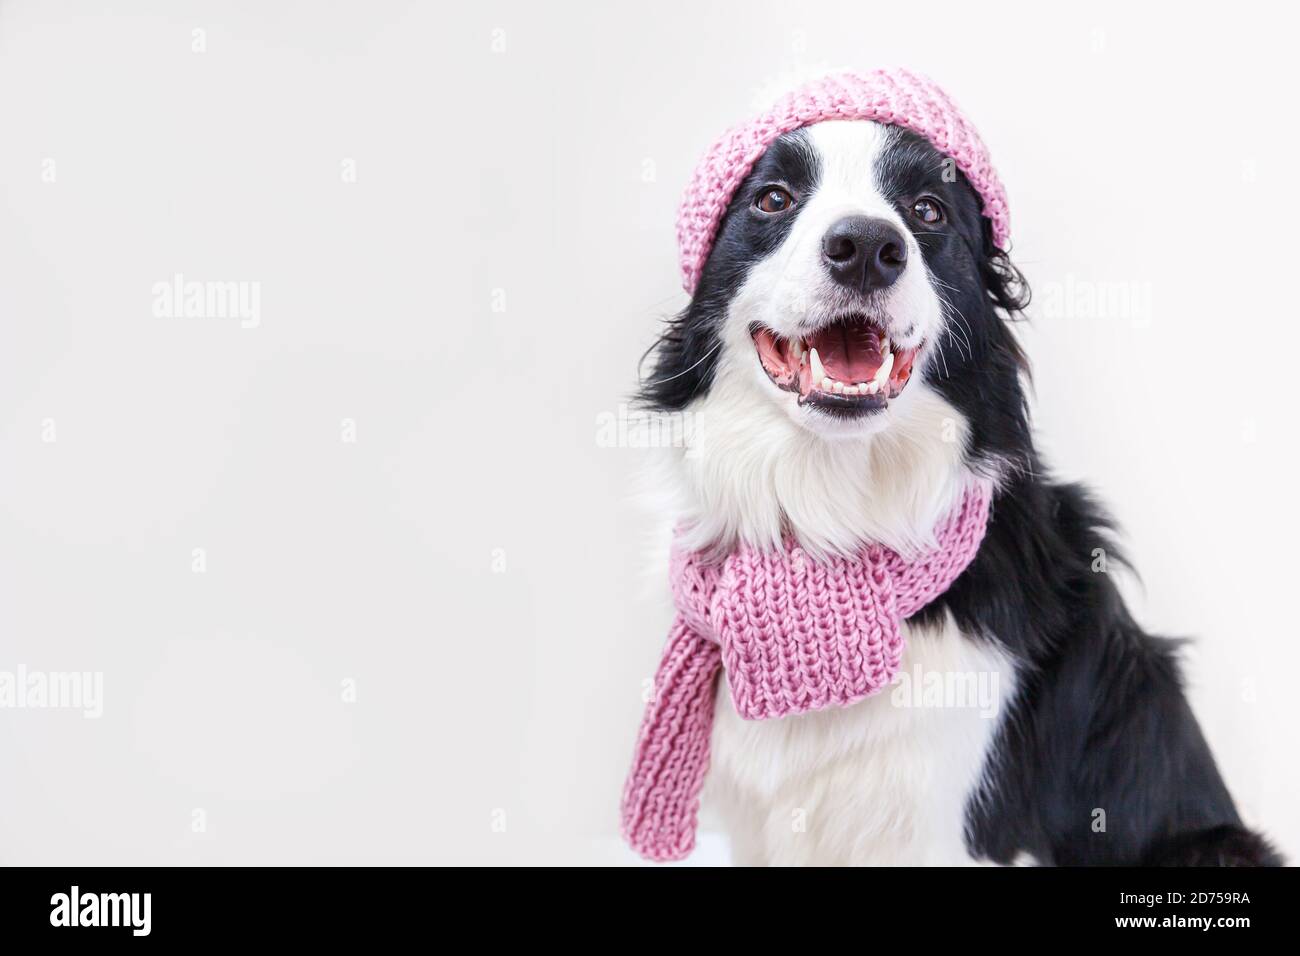 Premium Photo  Funny cute puppy dog border collie wearing warm